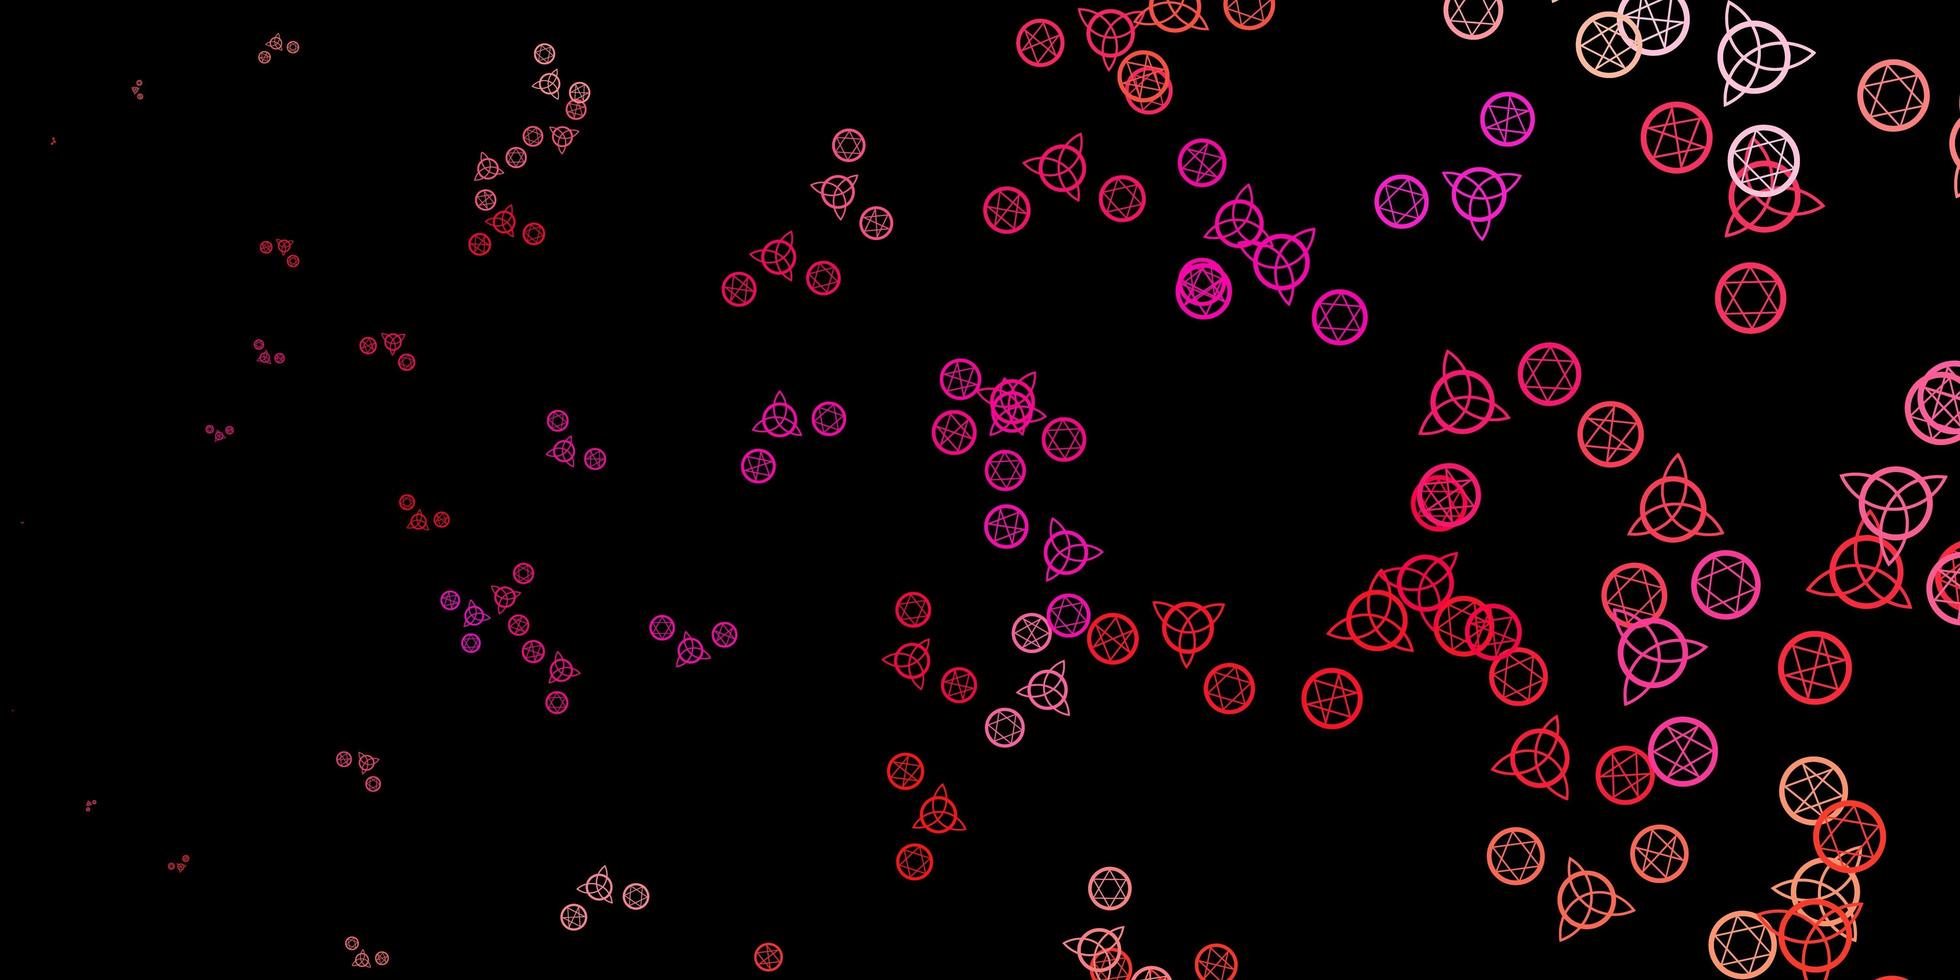 patrón de vector de color rosa oscuro con elementos mágicos.